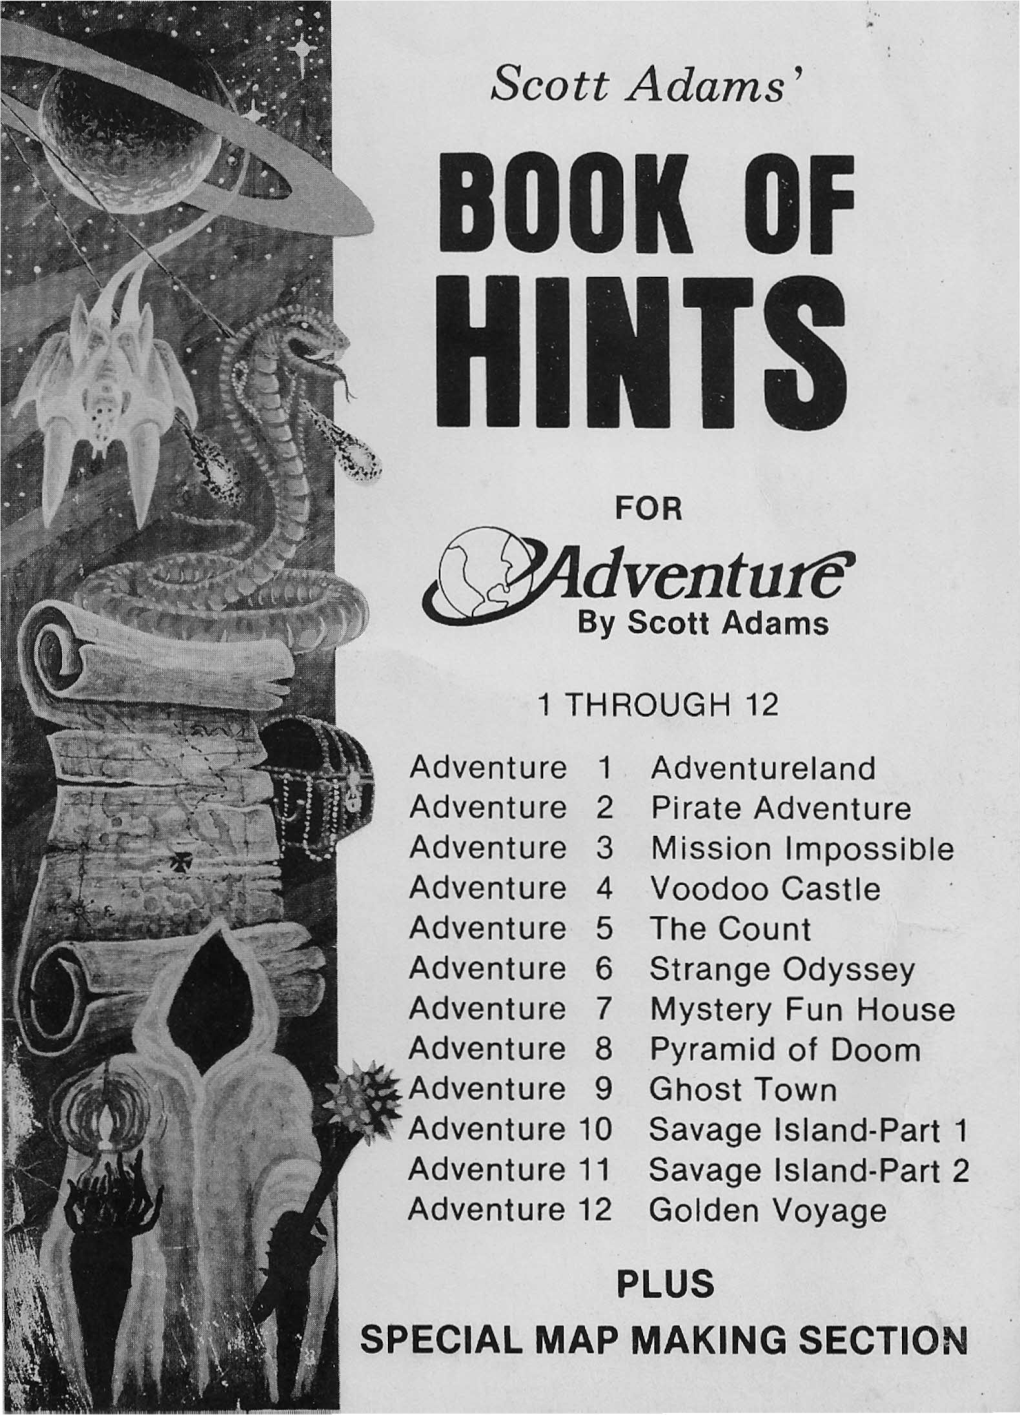 Scott Adams' BOOK of HINTS for Rl?:Jiidventure' ~BY Scott Adams